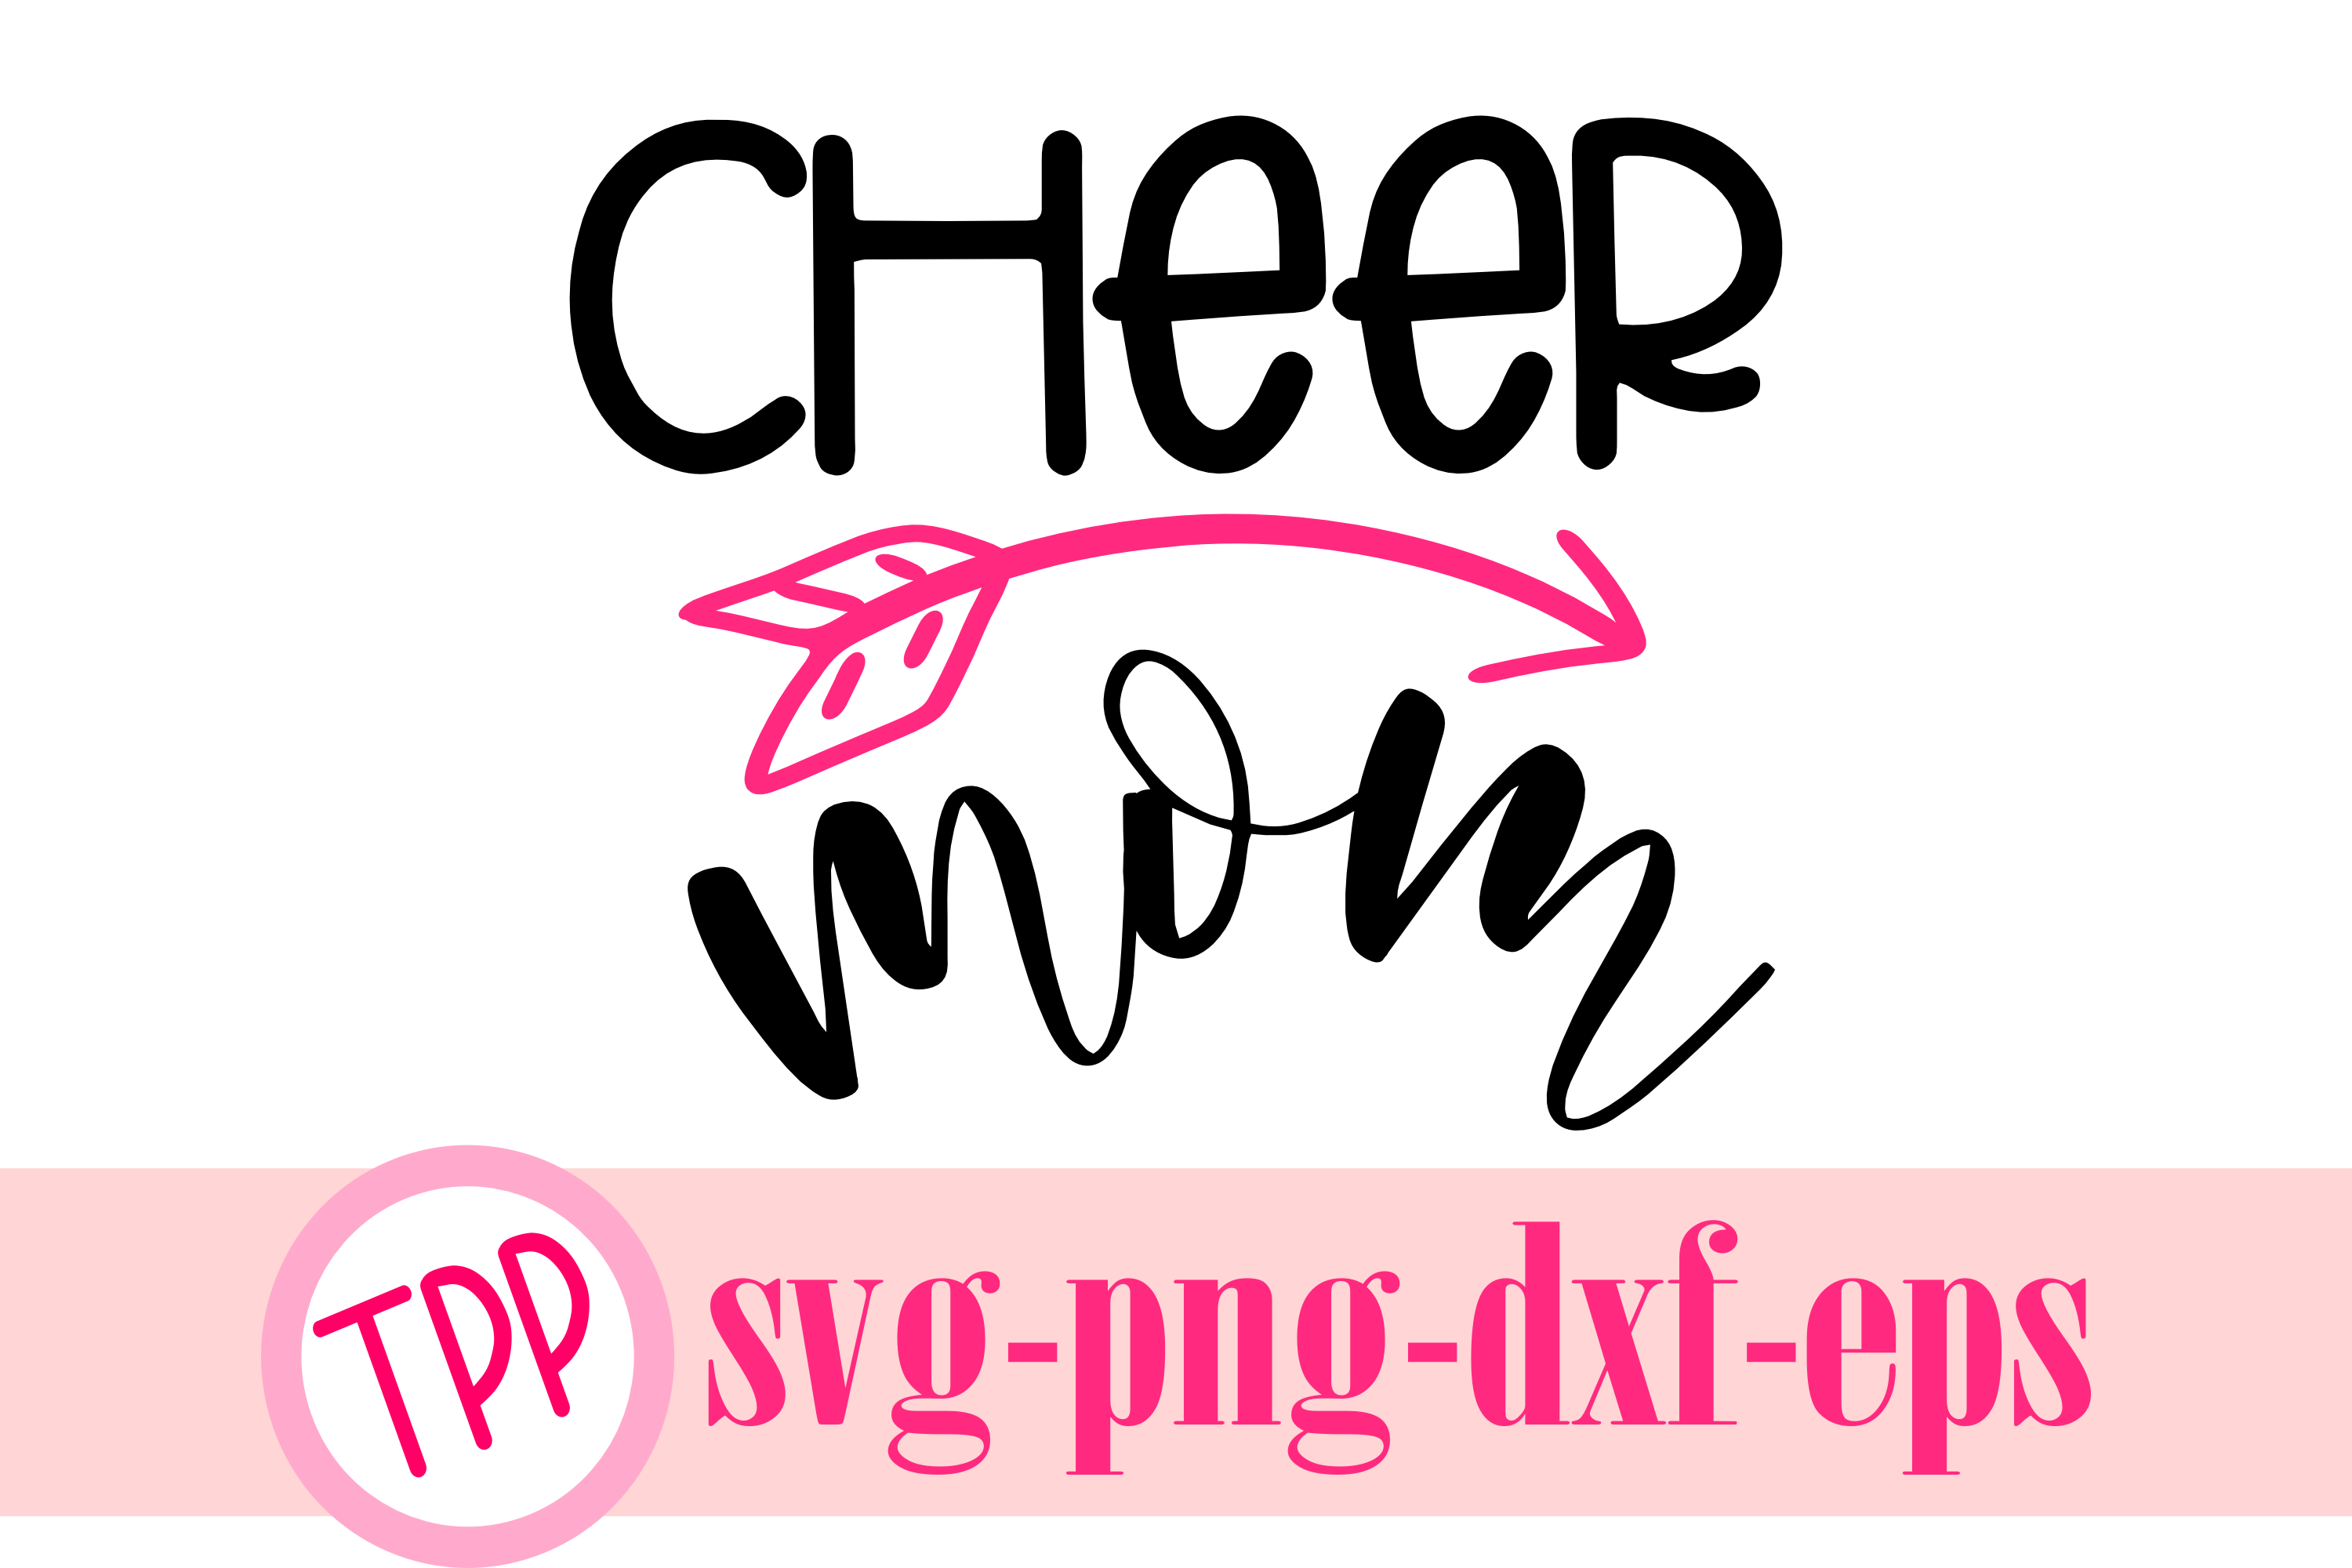 Download Cheer MOM svg, cheer svg, cheerleader design